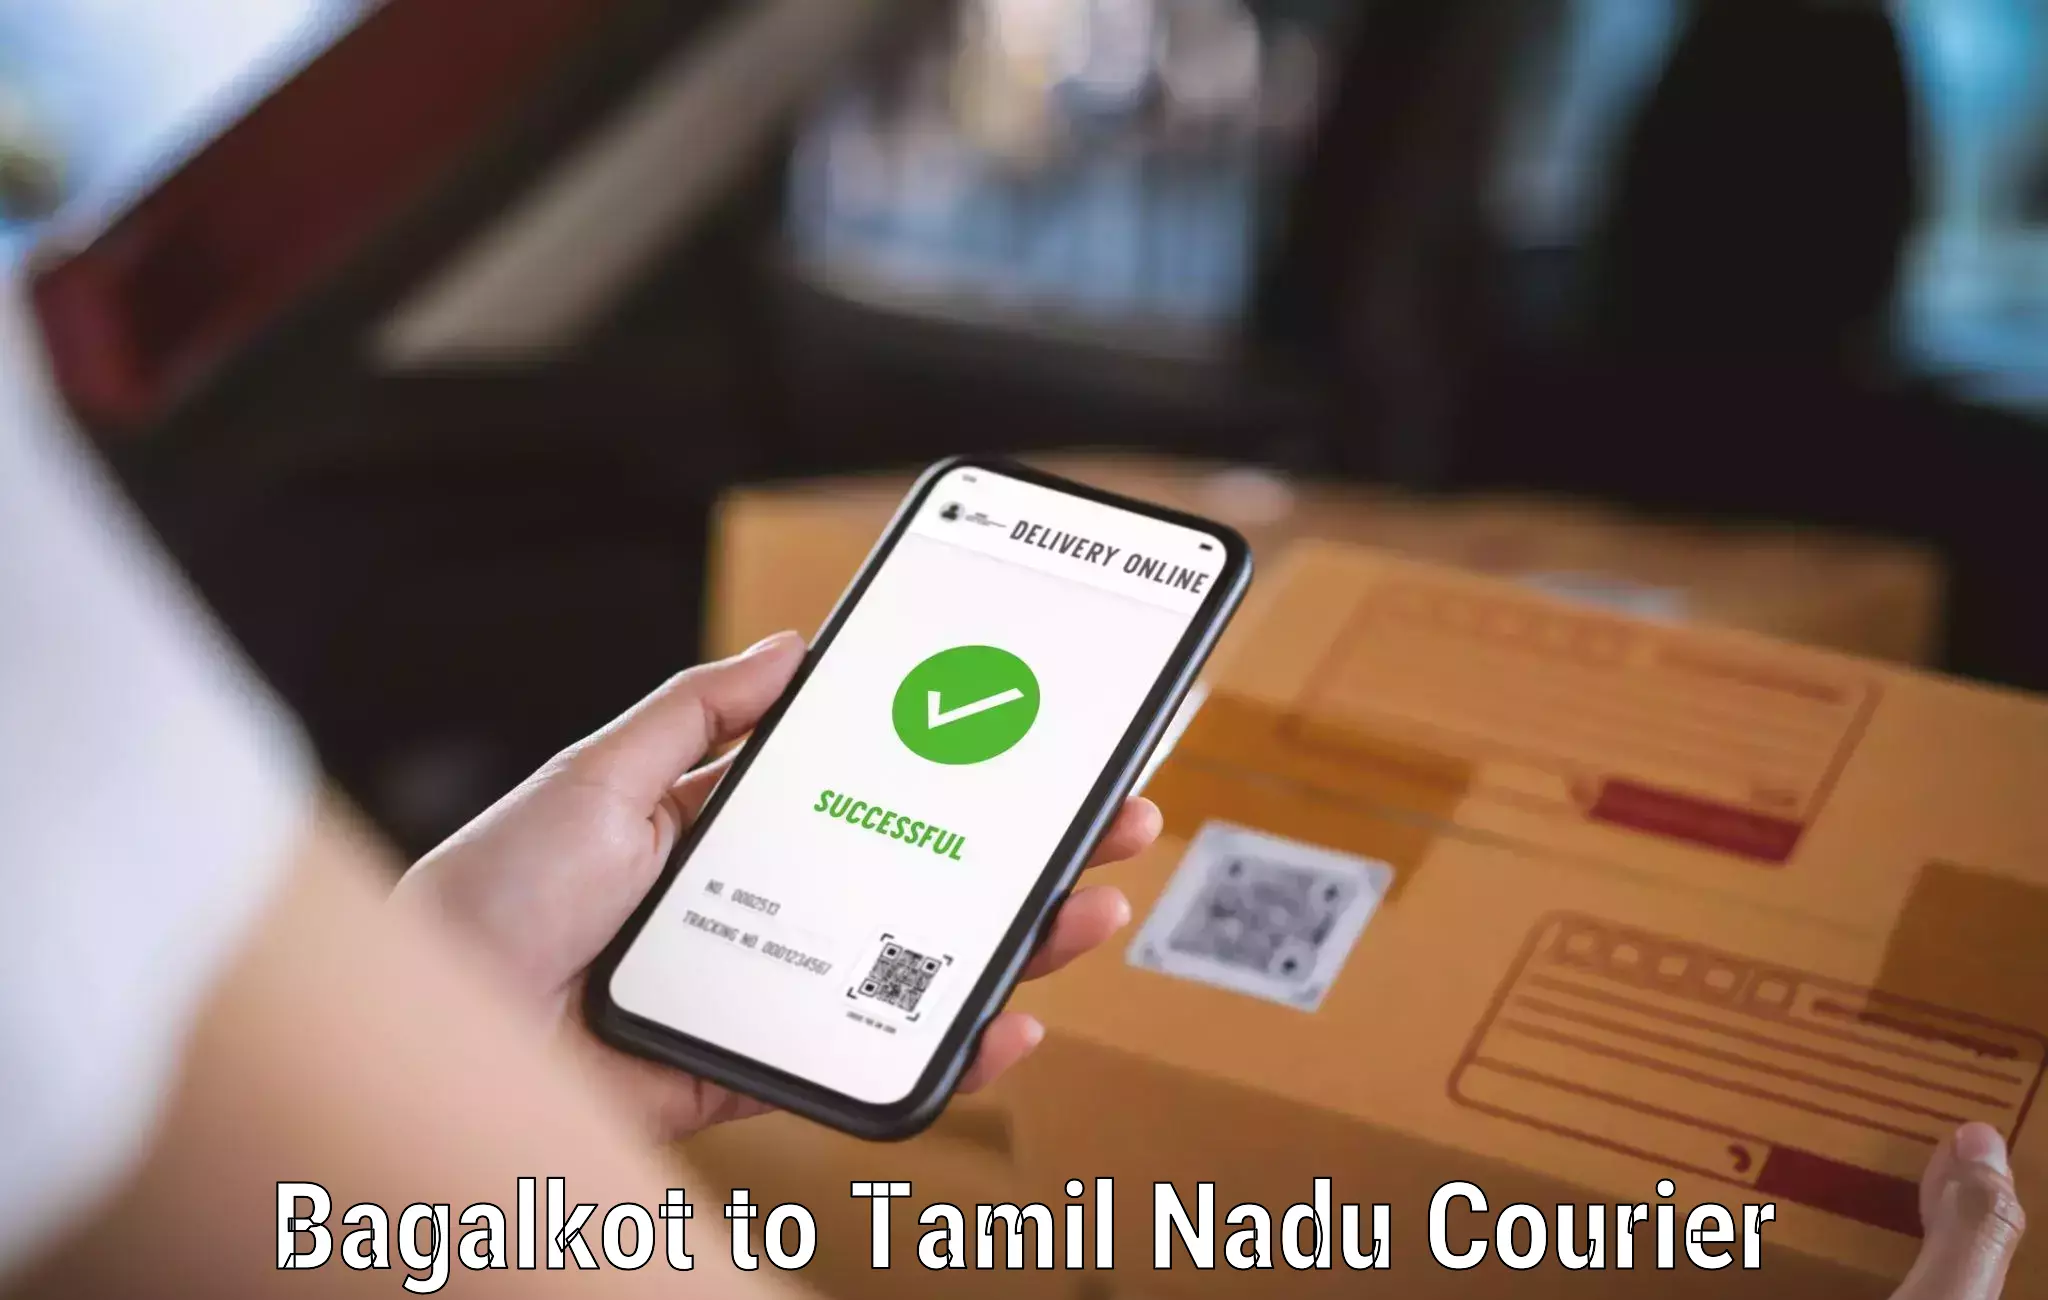 Courier service booking Bagalkot to Rathinasabapathy Puram